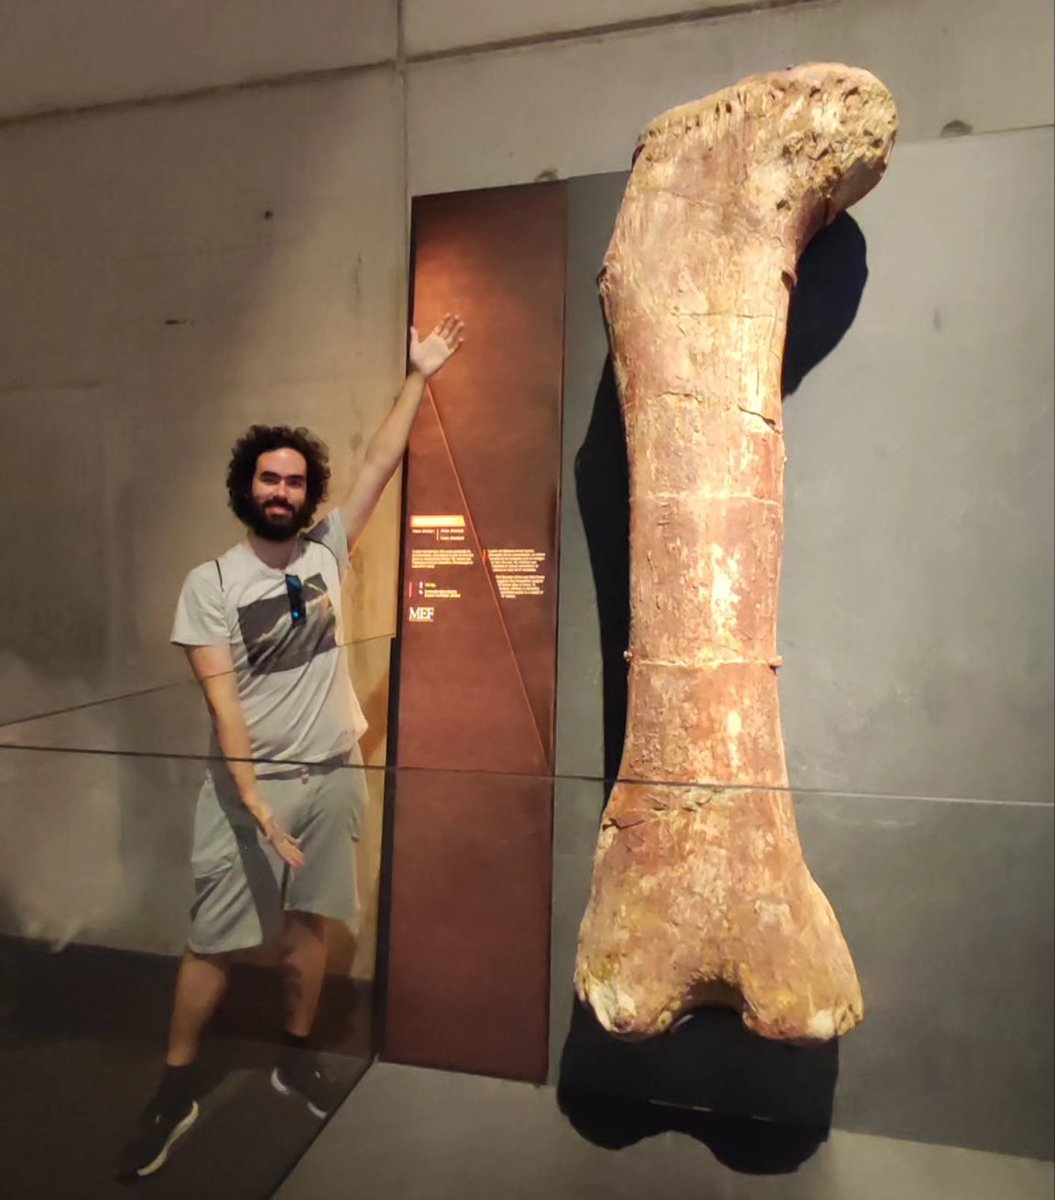 Fémur de Patagotitan (mido 1,93m) 😱🦕 Cosmocaixa, Barcelona

#paleontology #paleontologist #argentina